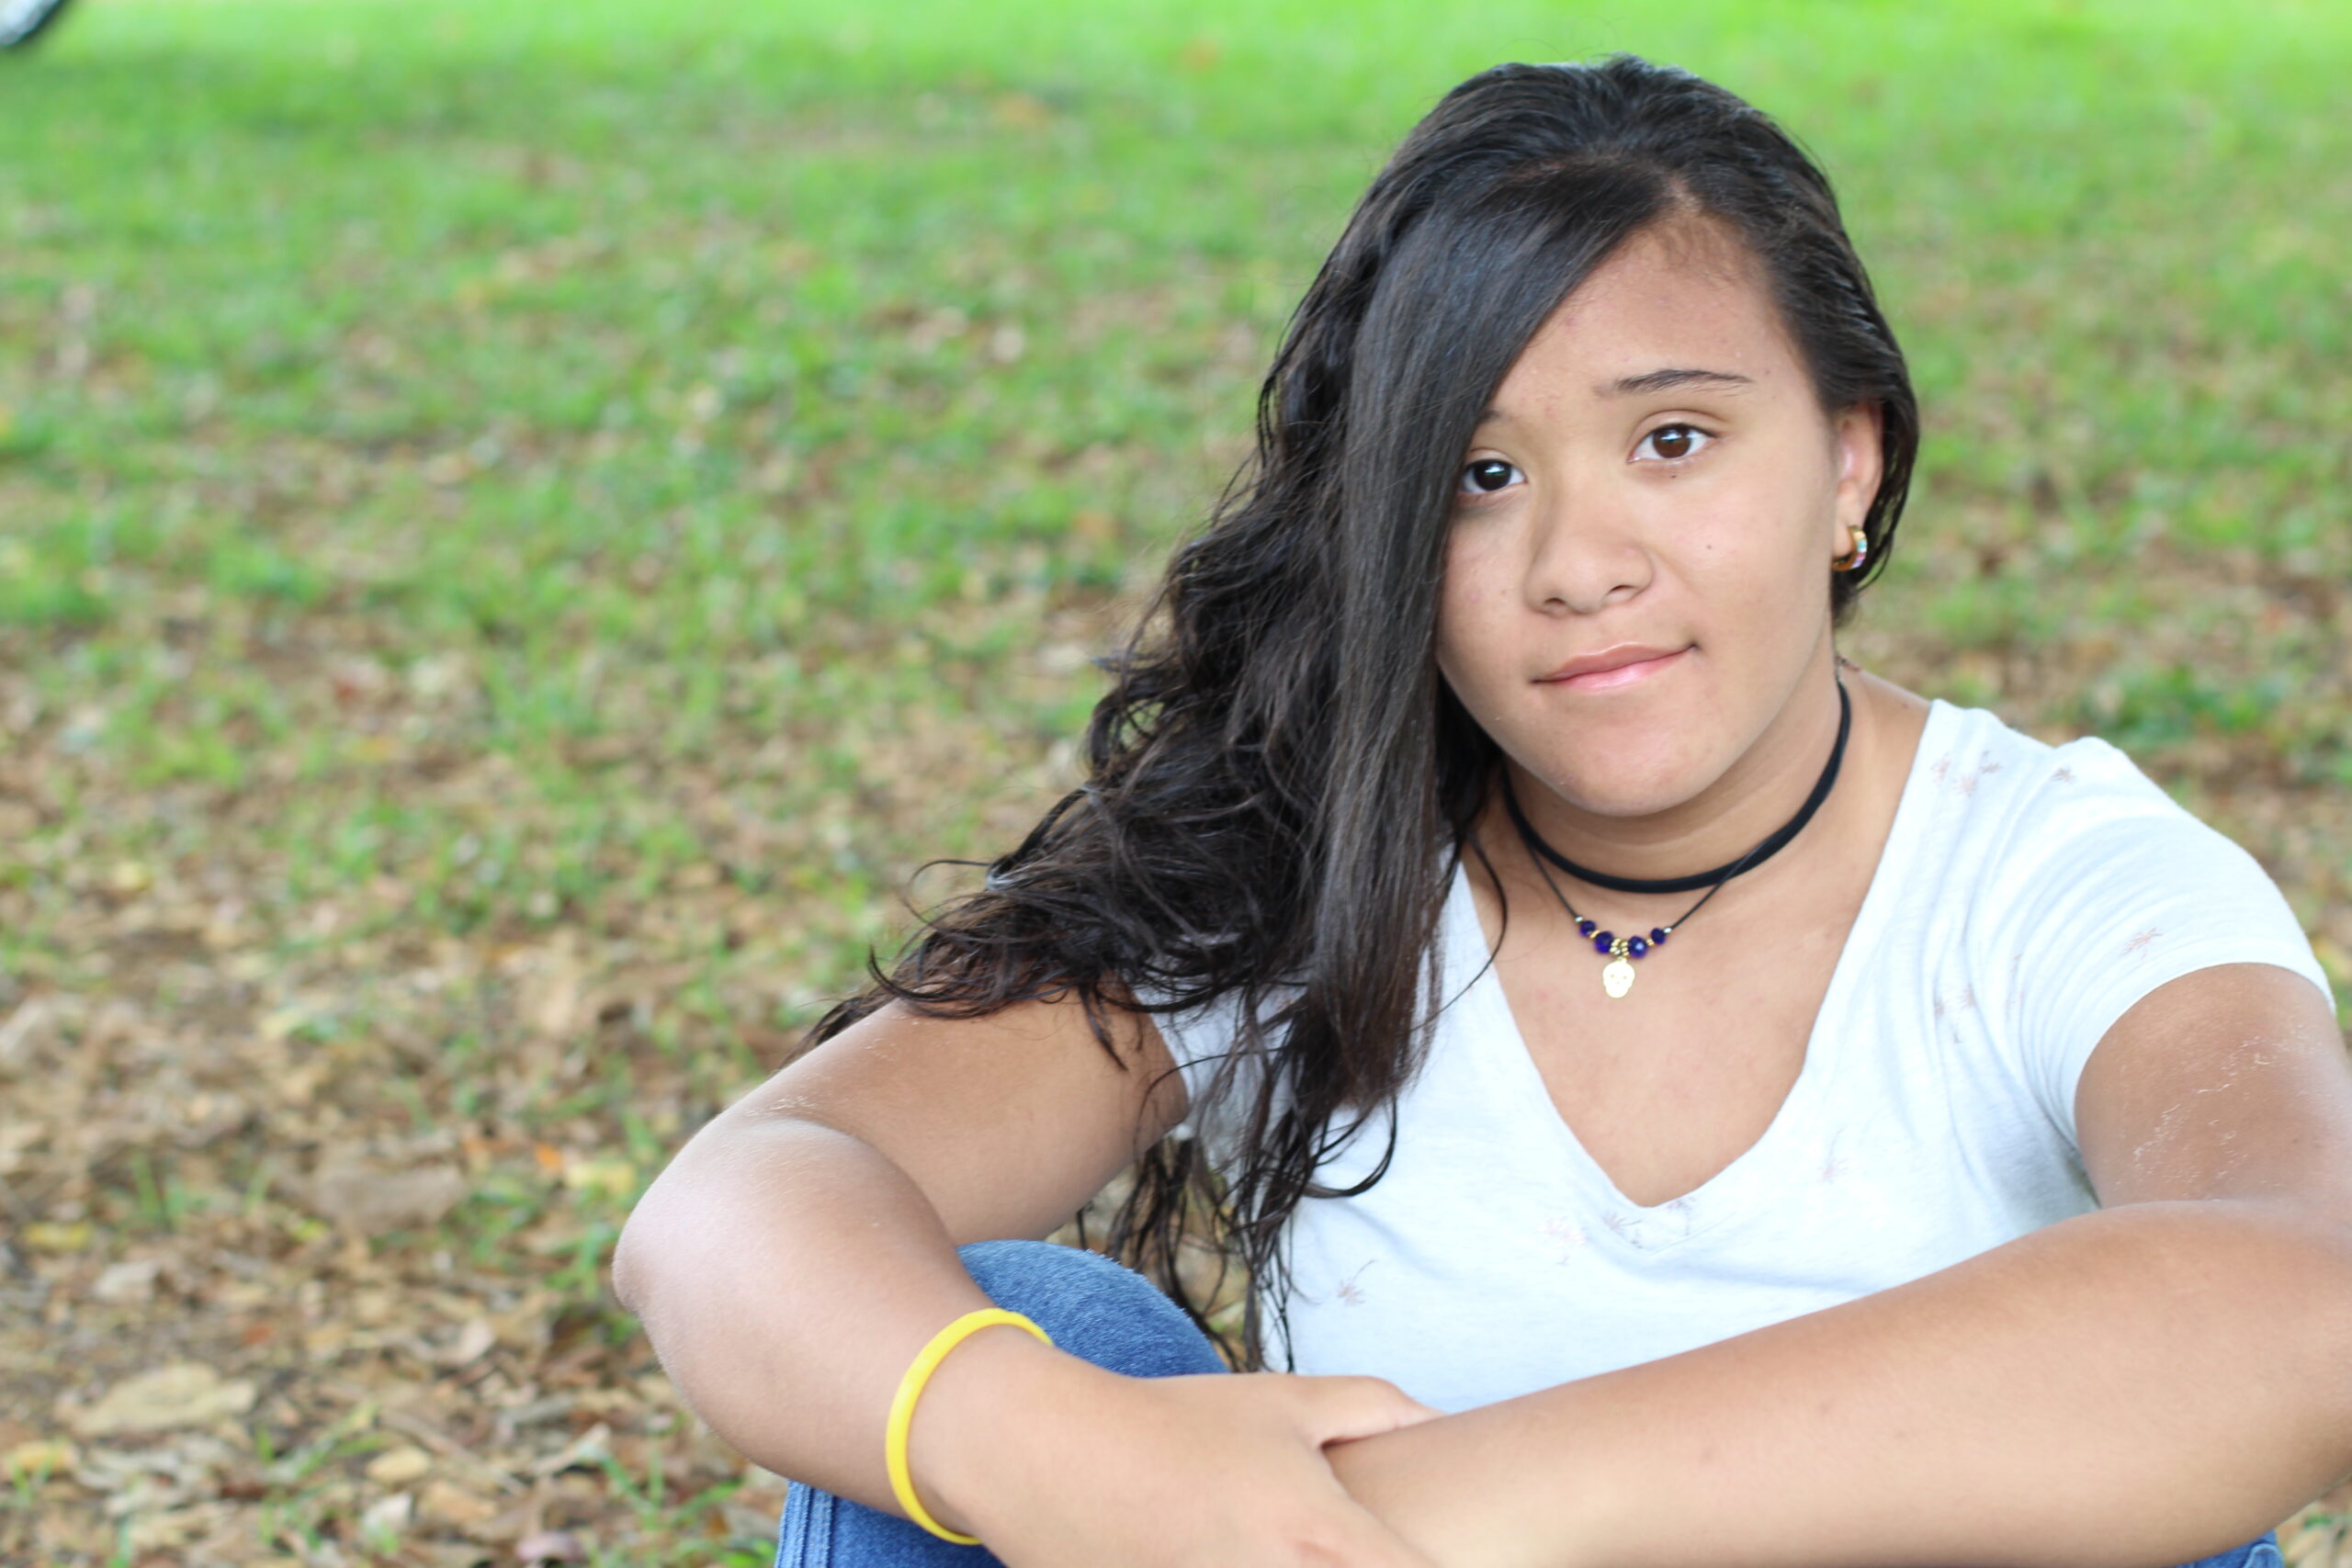 Teen girl sitting on grass